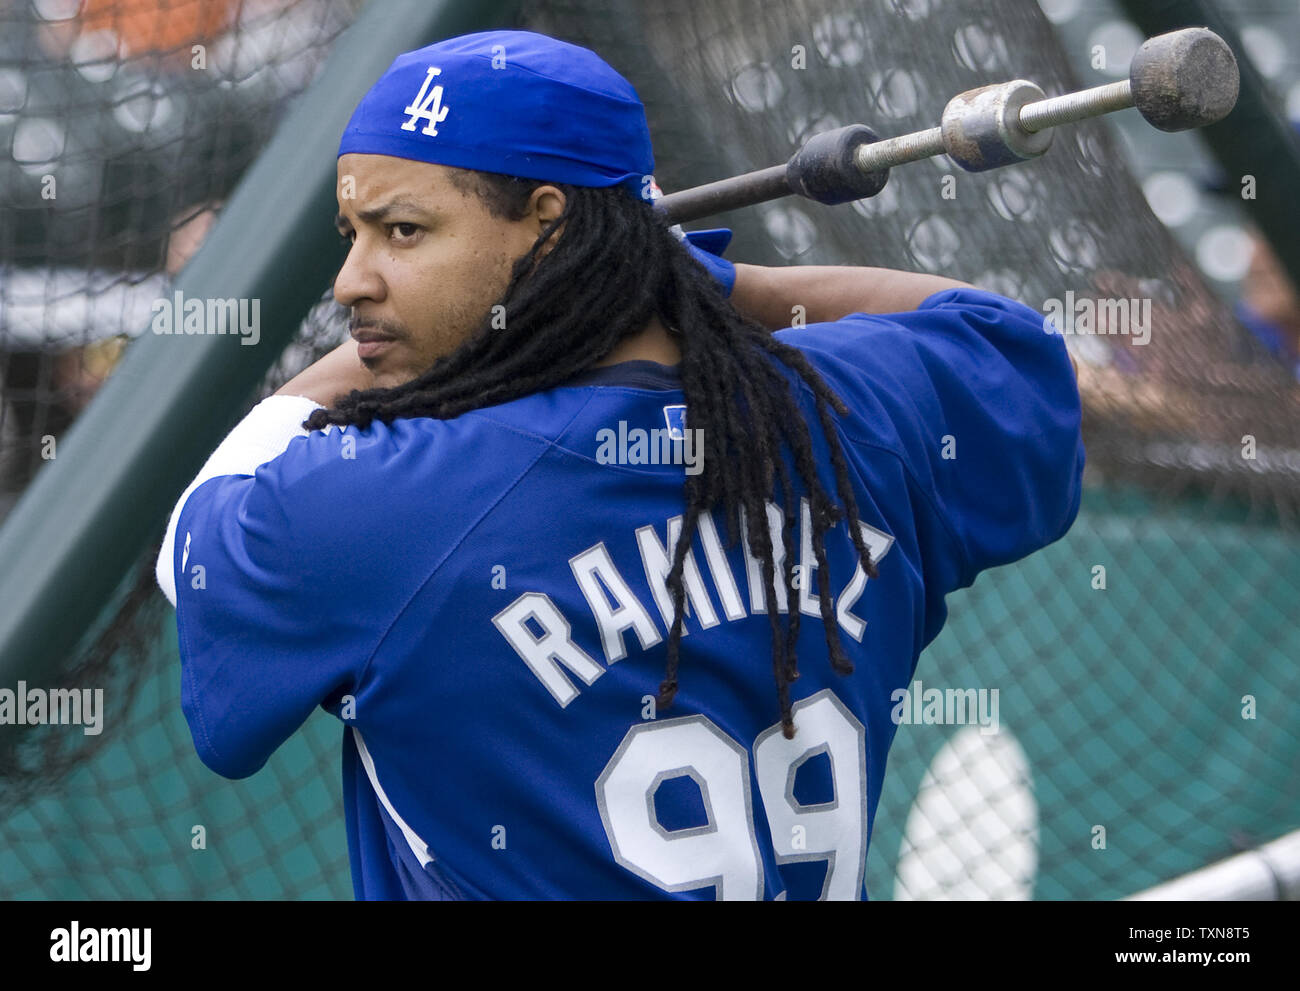 Manny ramirez batting hi-res stock photography and images - Alamy